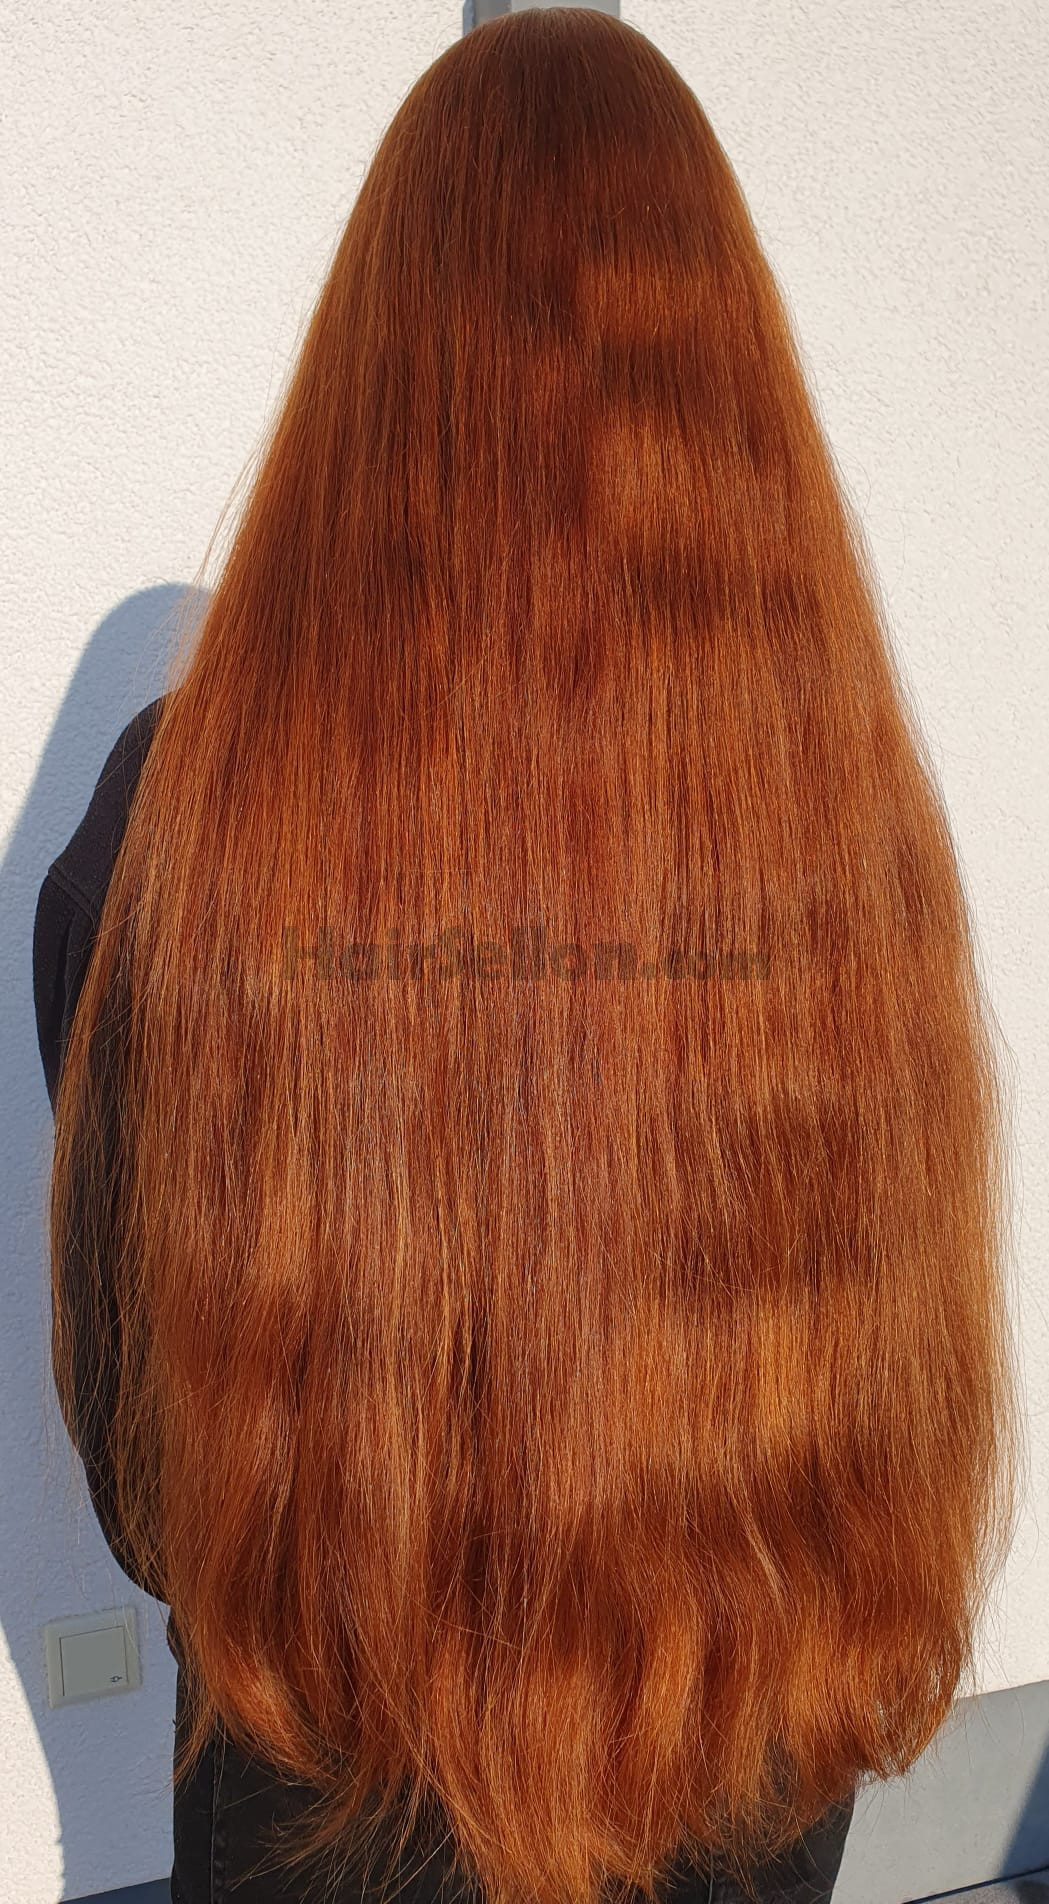 Virgin red hair, 22 '' - HairSellon